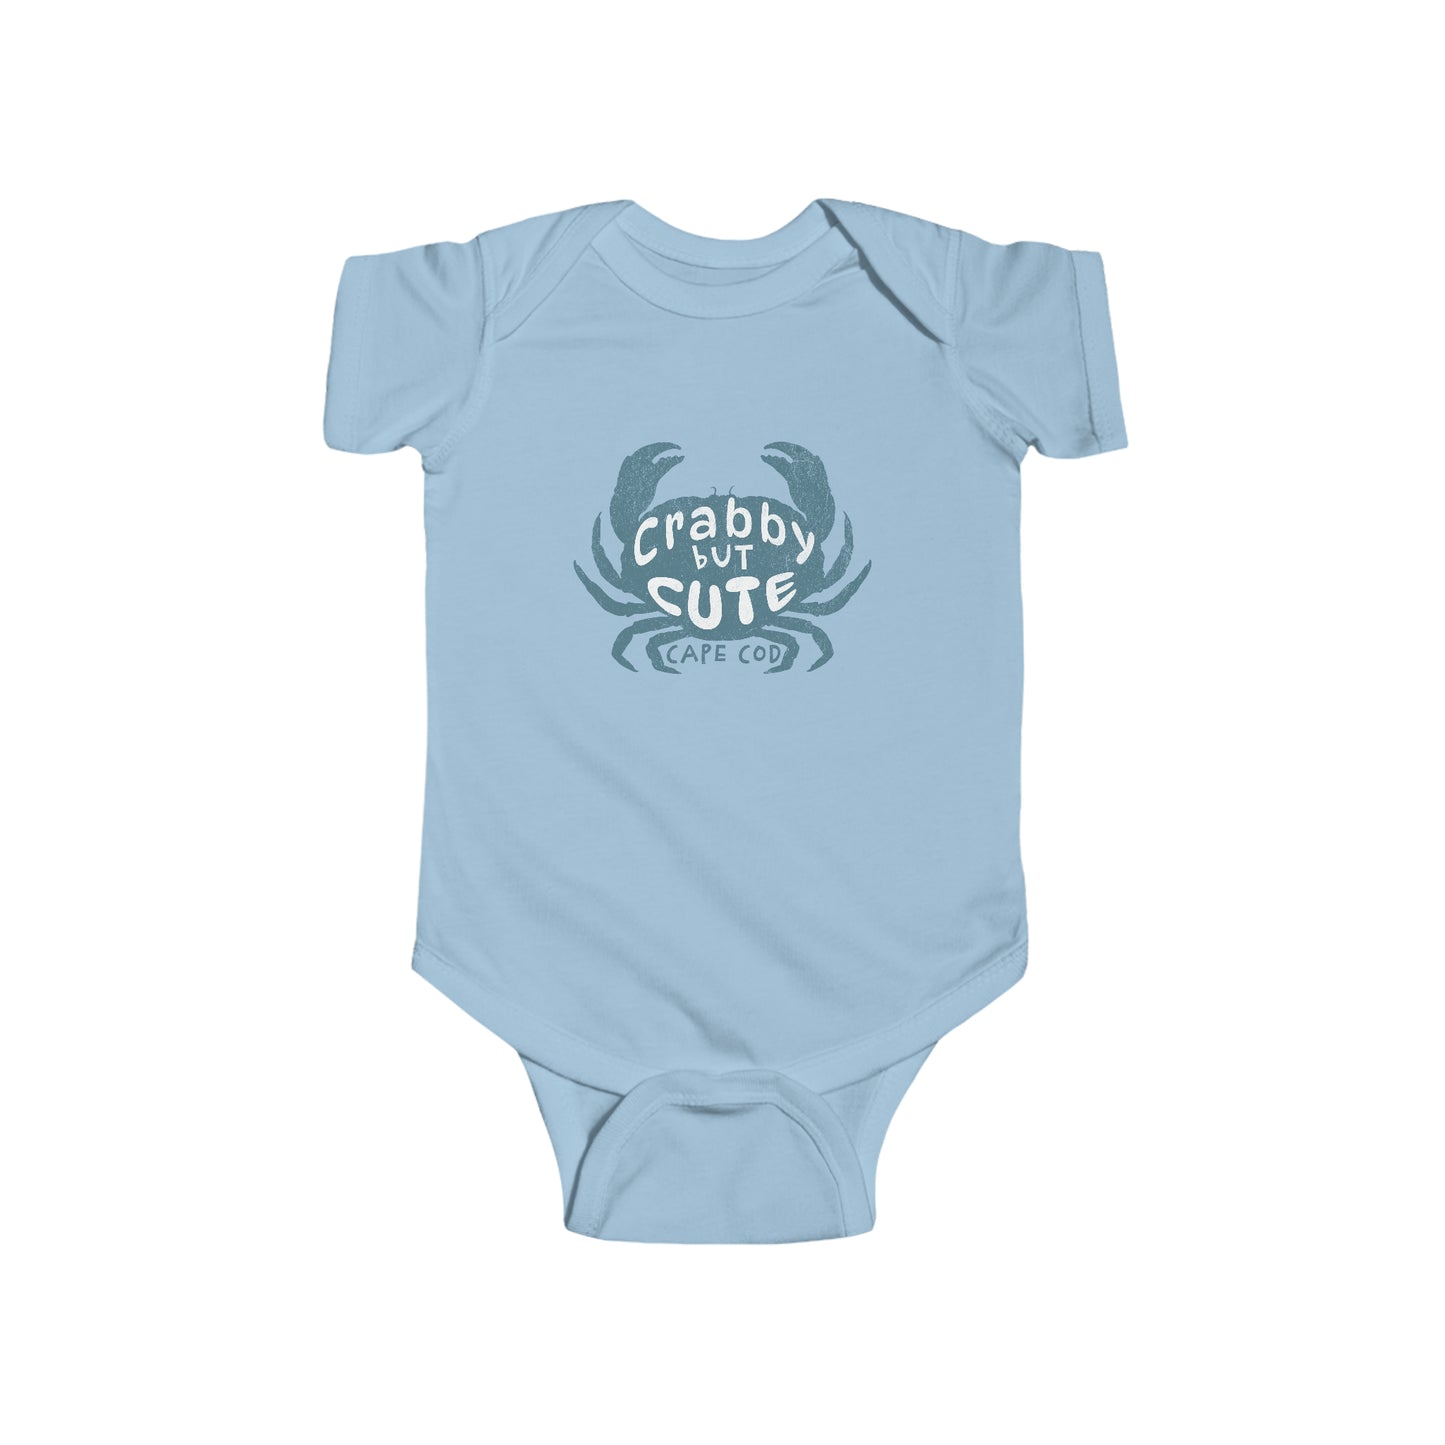 Cape Cod Crabby But Cute Baby Onesie Bodysuit